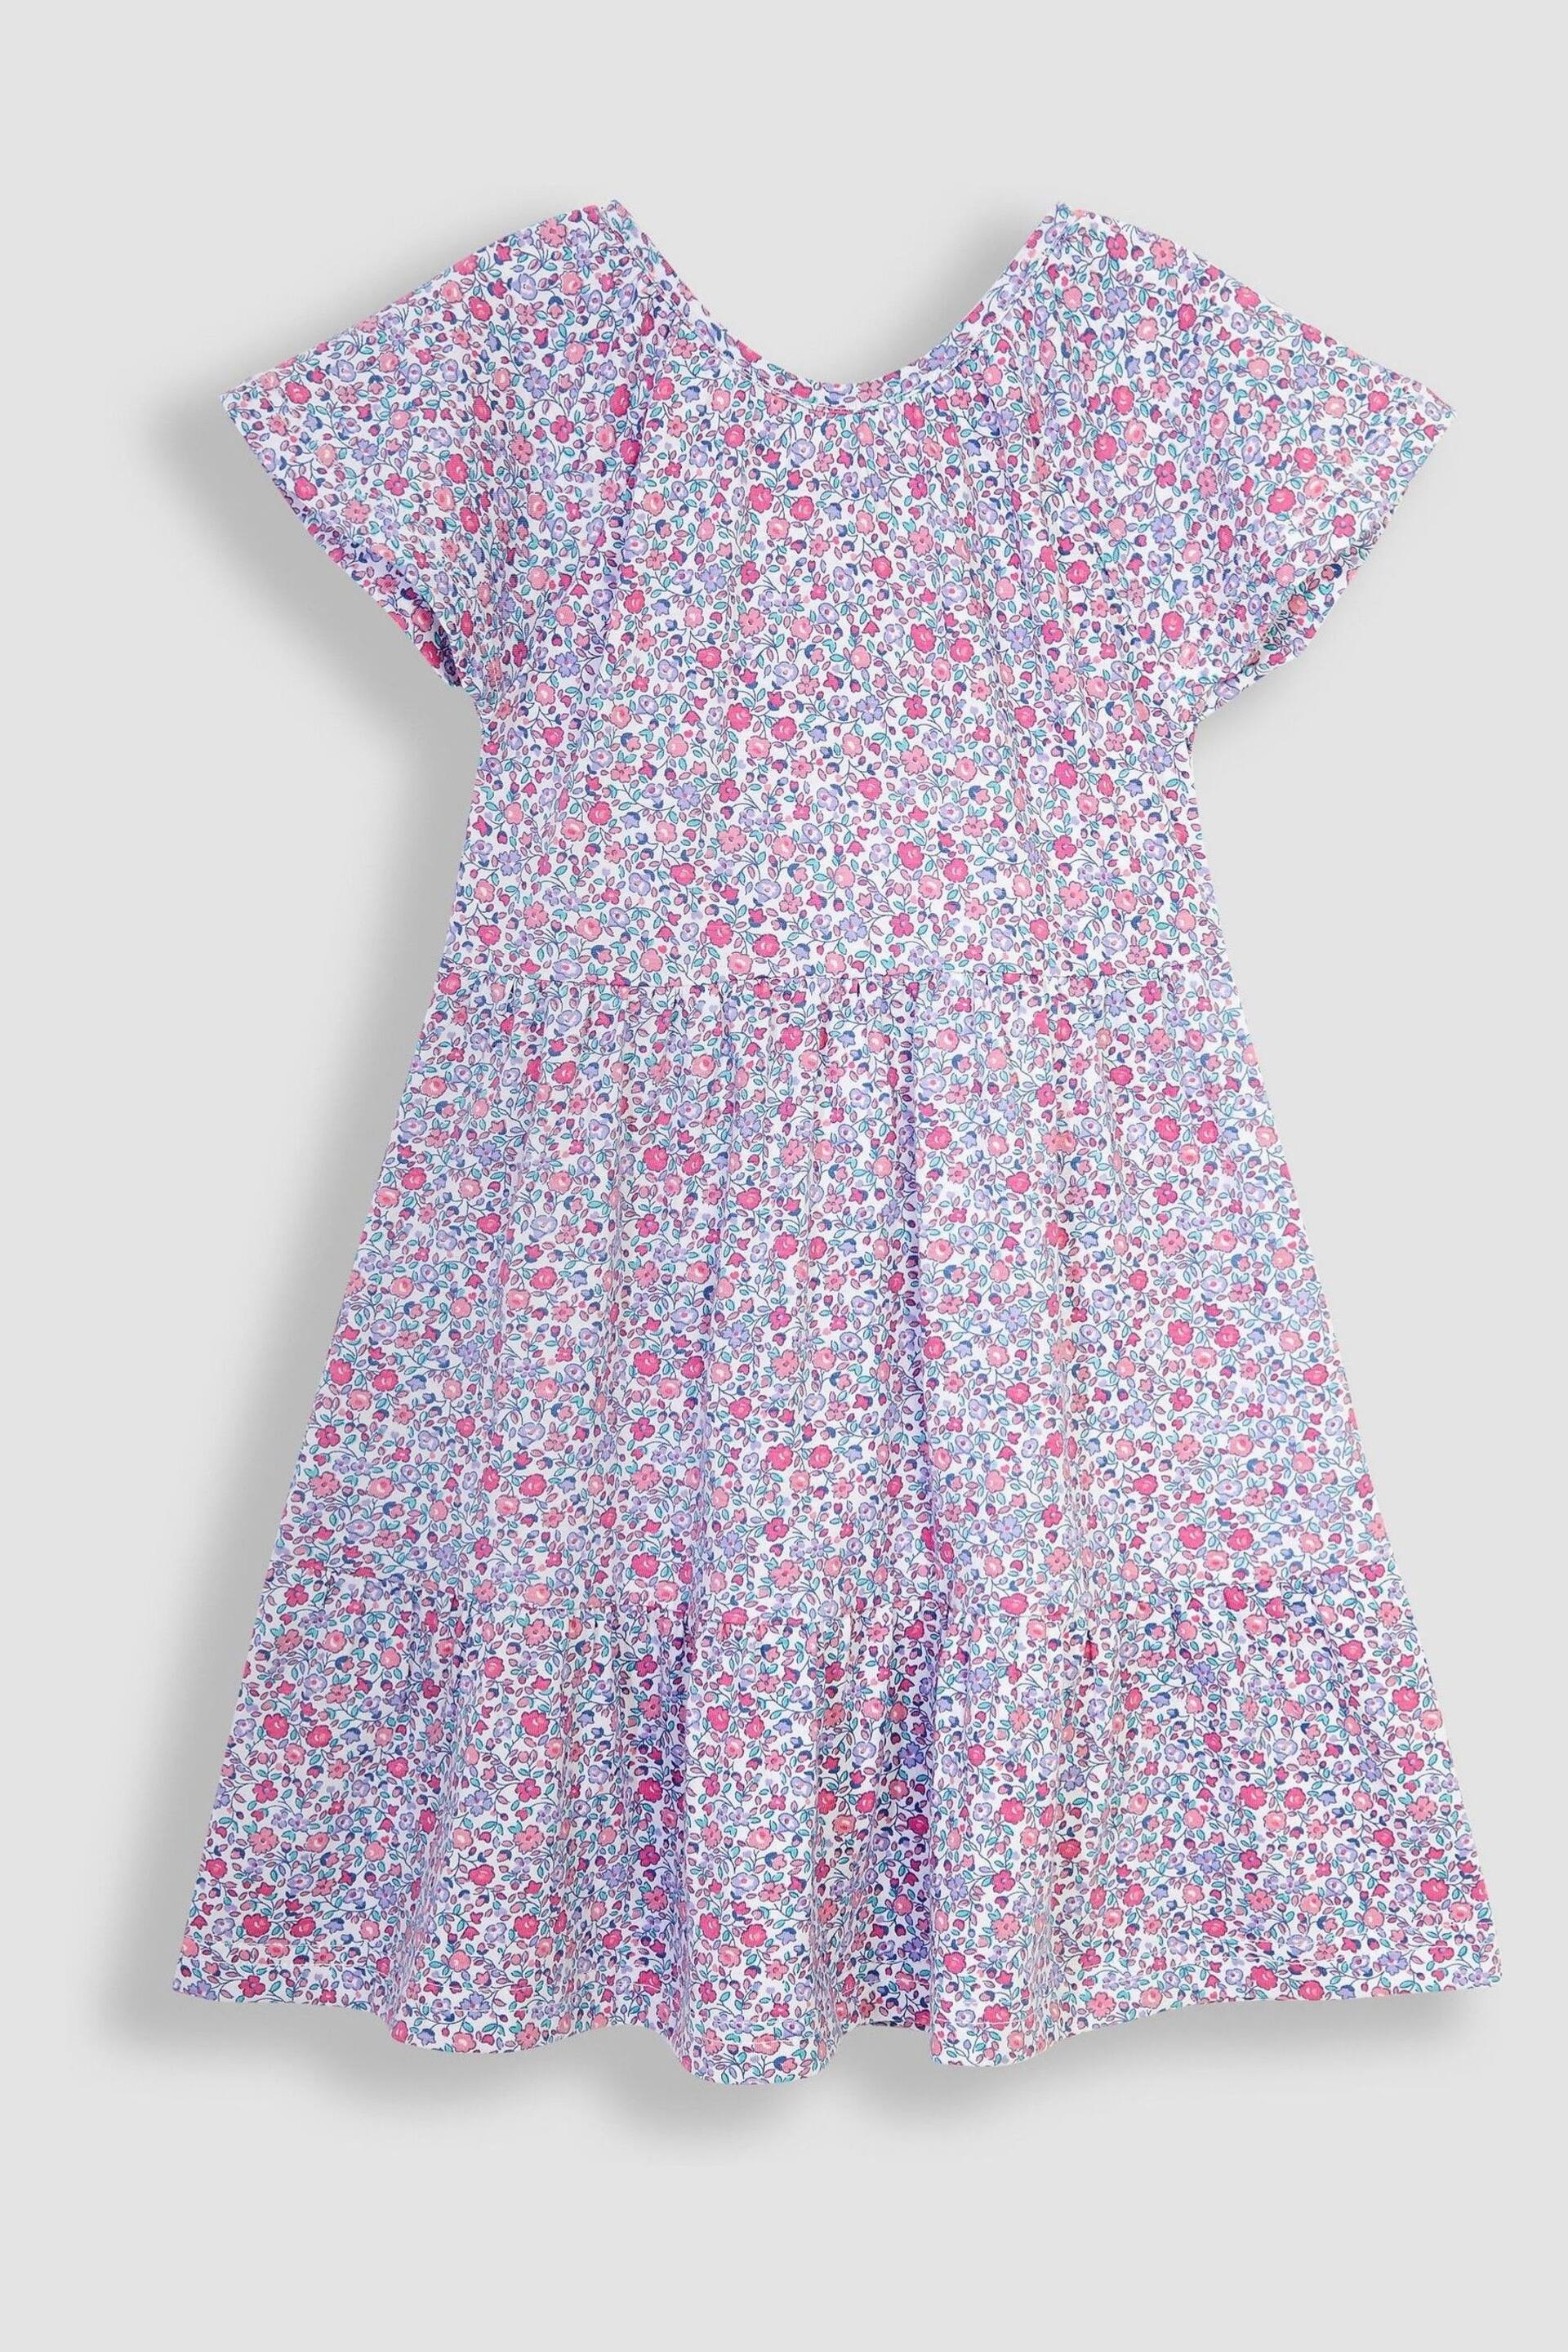 JoJo Maman Bébé Pink Pastel Ditsy Floral Ruffle Sleeve Tiered Jersey Dress - Image 1 of 3